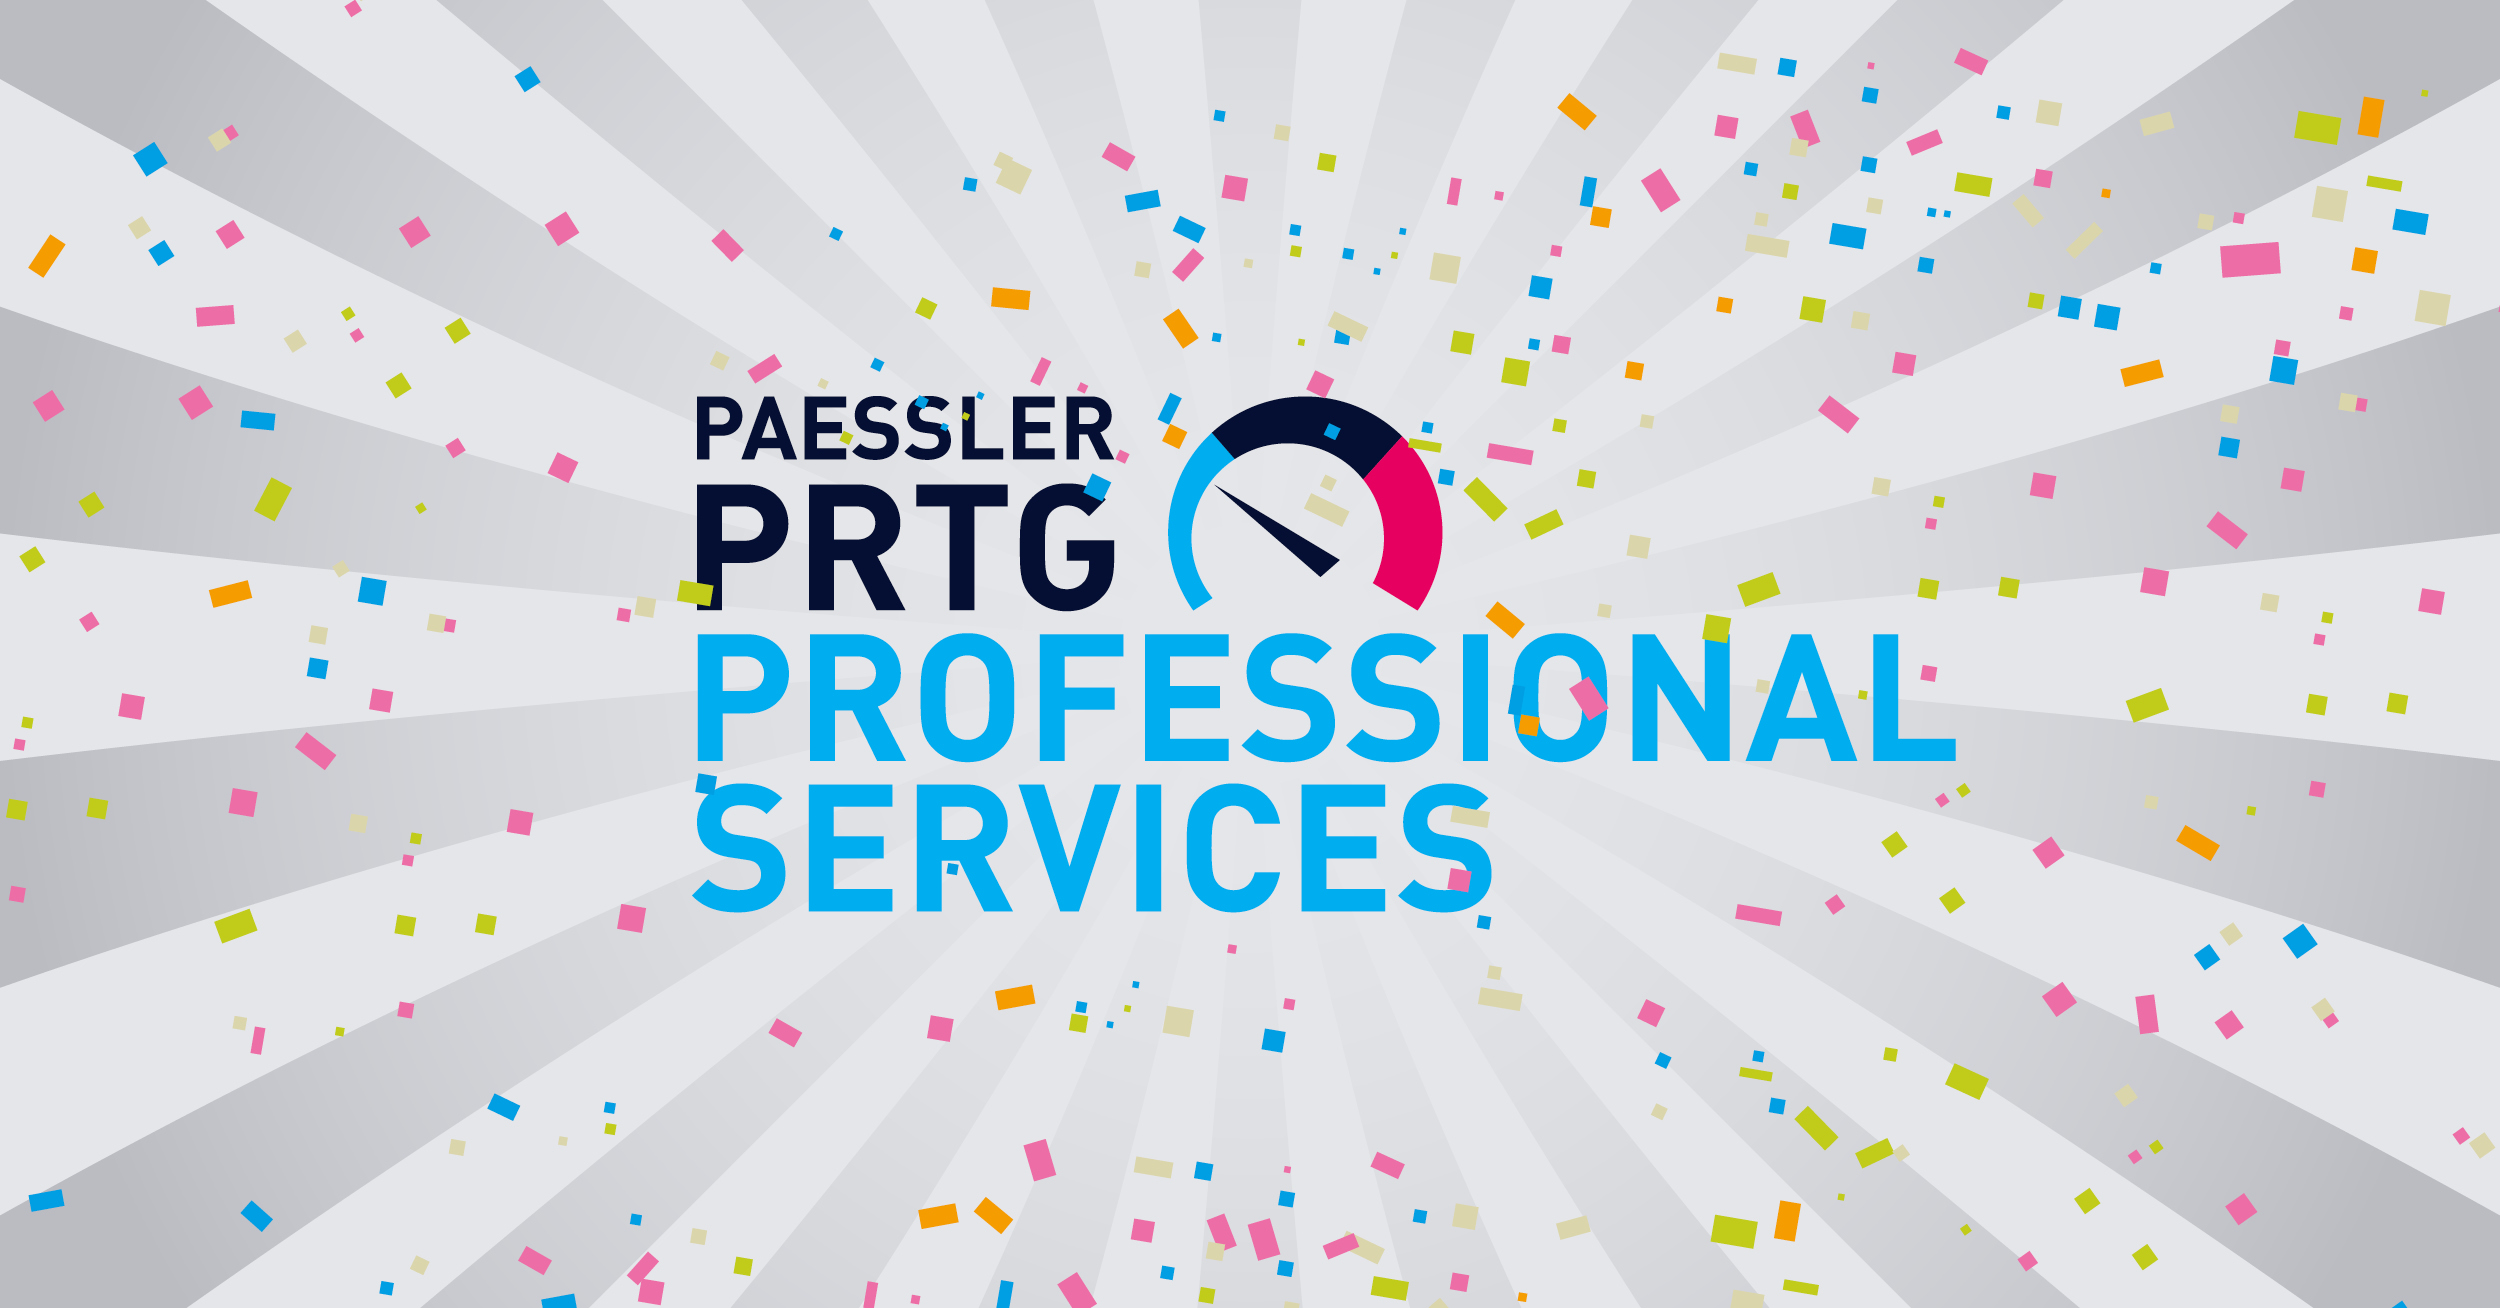 We proudly announce Paessler PRTG Professional Services